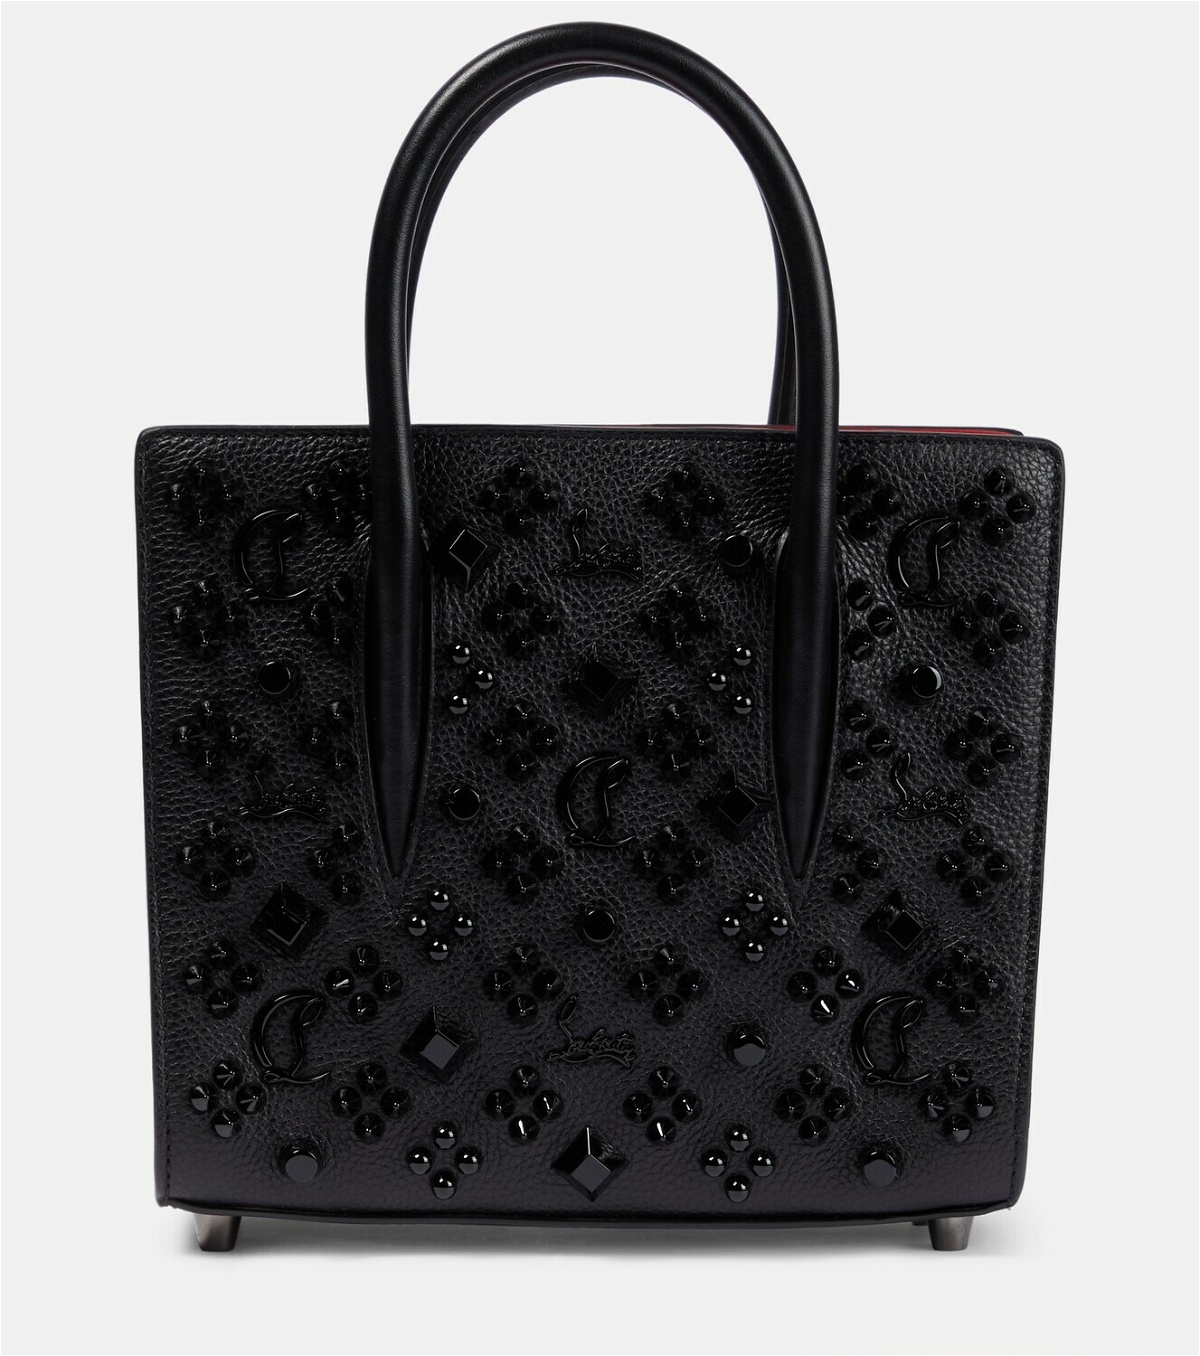 Christian Louboutin Paloma Leather Embellished Clutch Bag